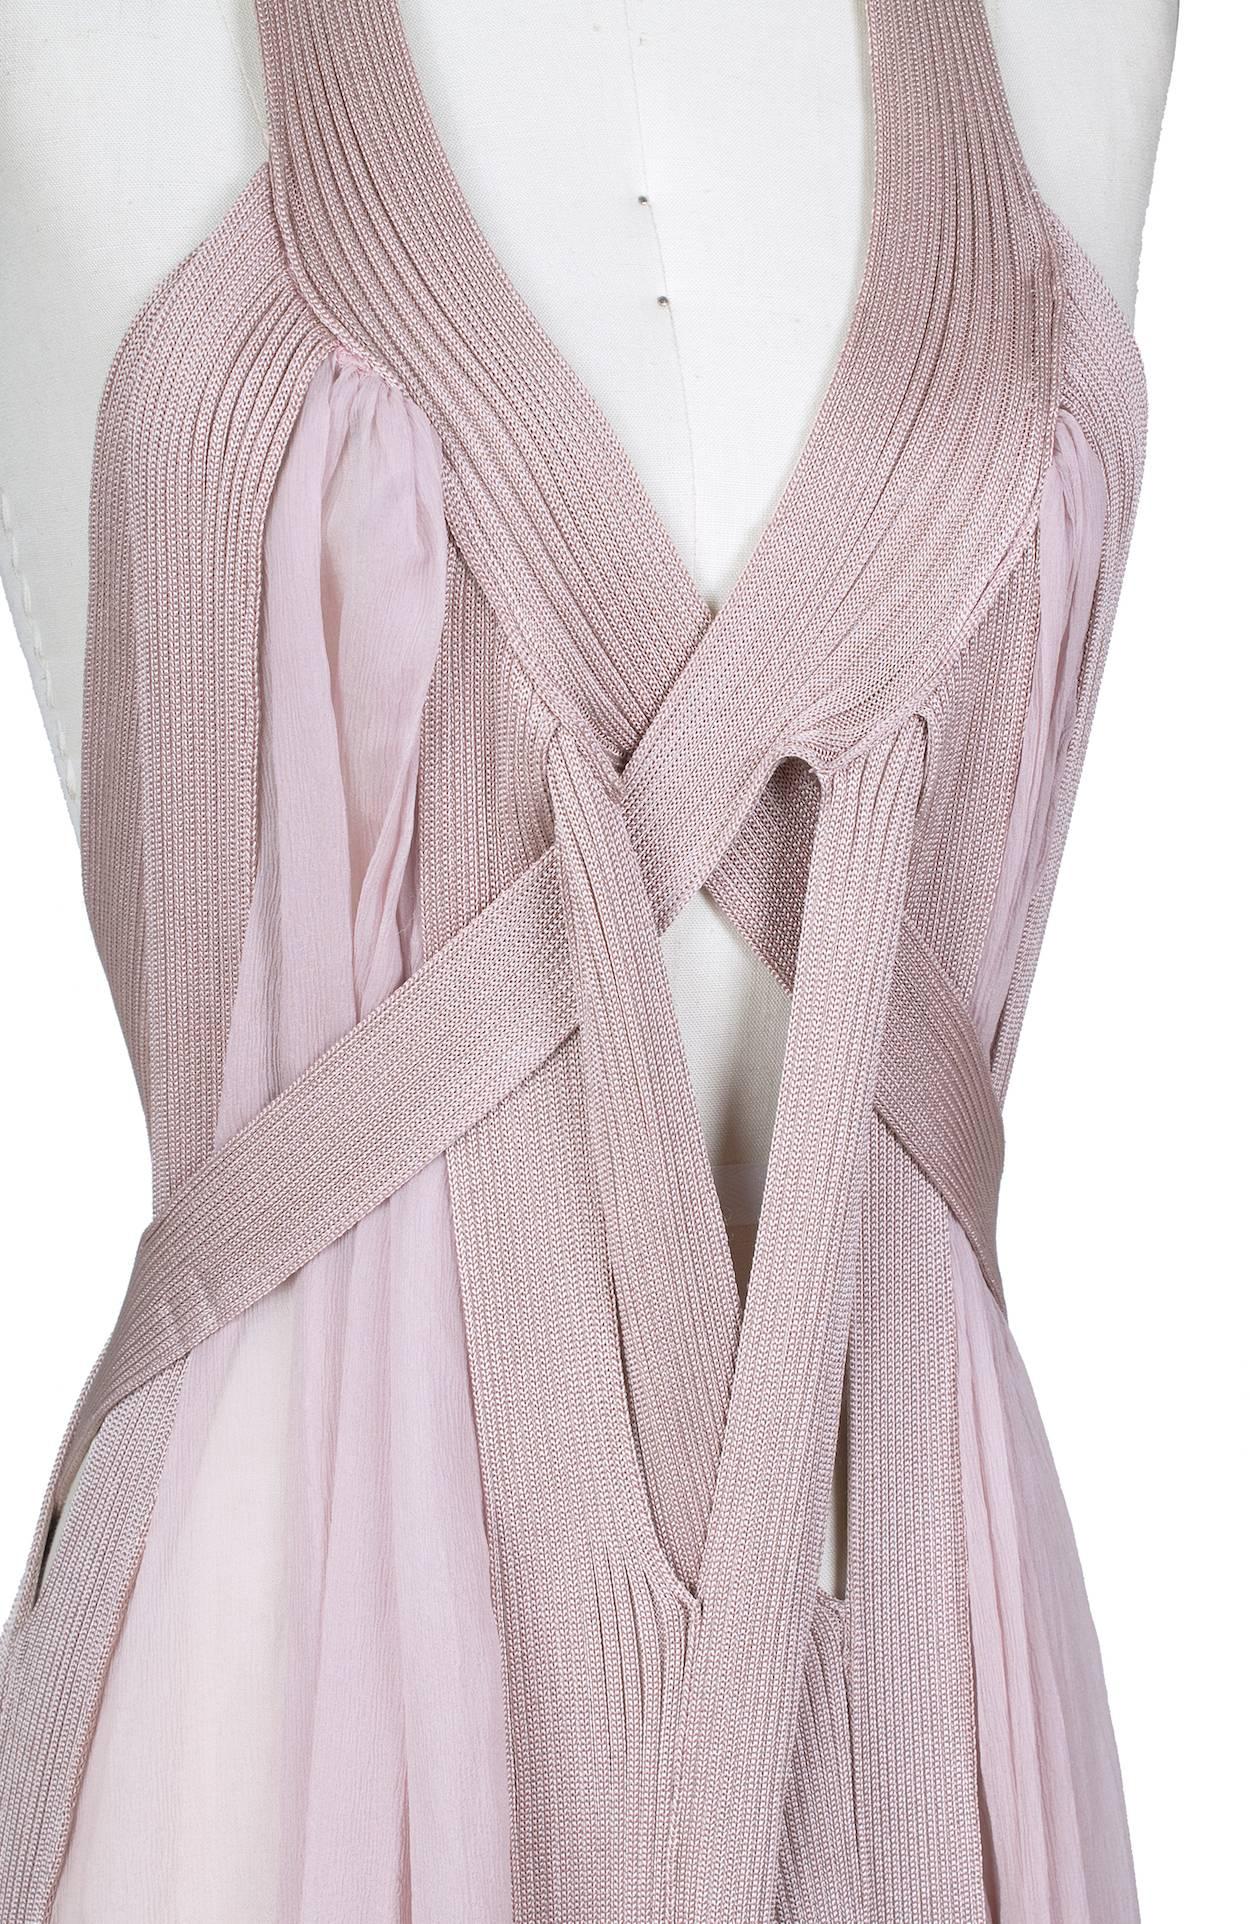 Gray Jean Paul Gaultier Chiffon and Knit Multi Strap Dress